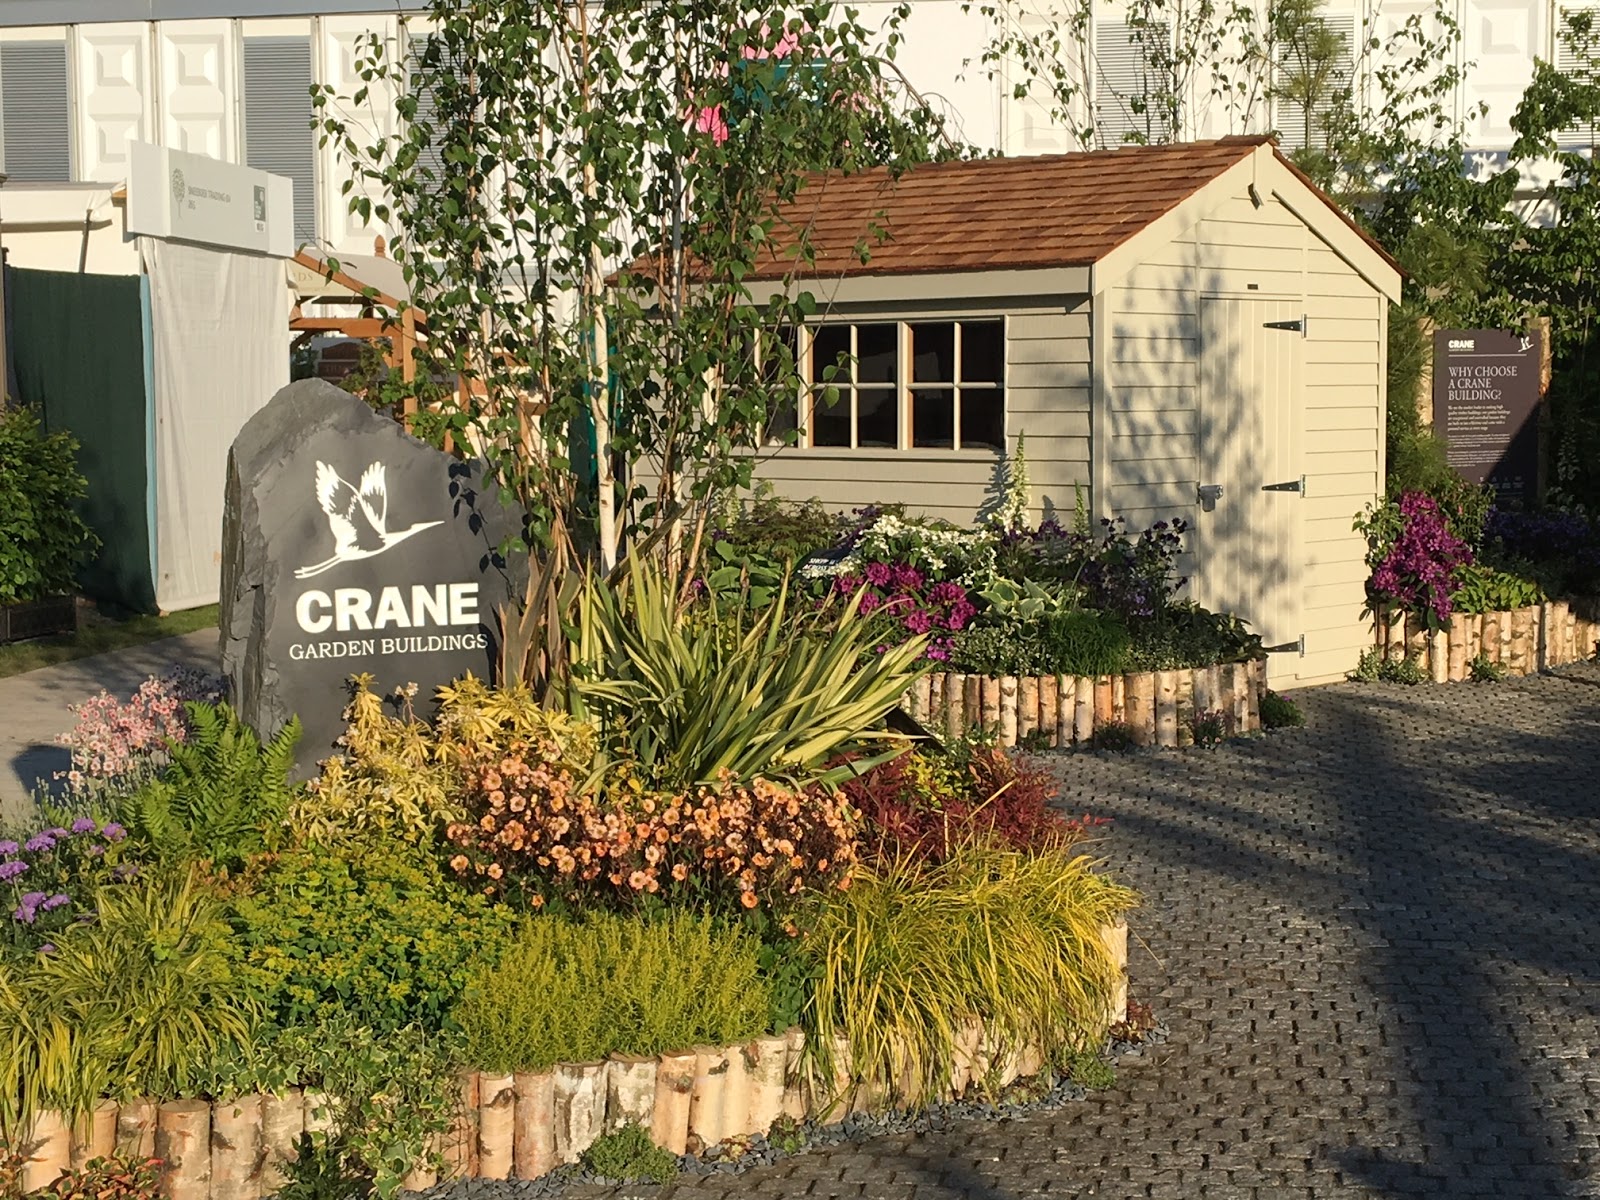 shedworking: crane garden buildings at chelsea flower show